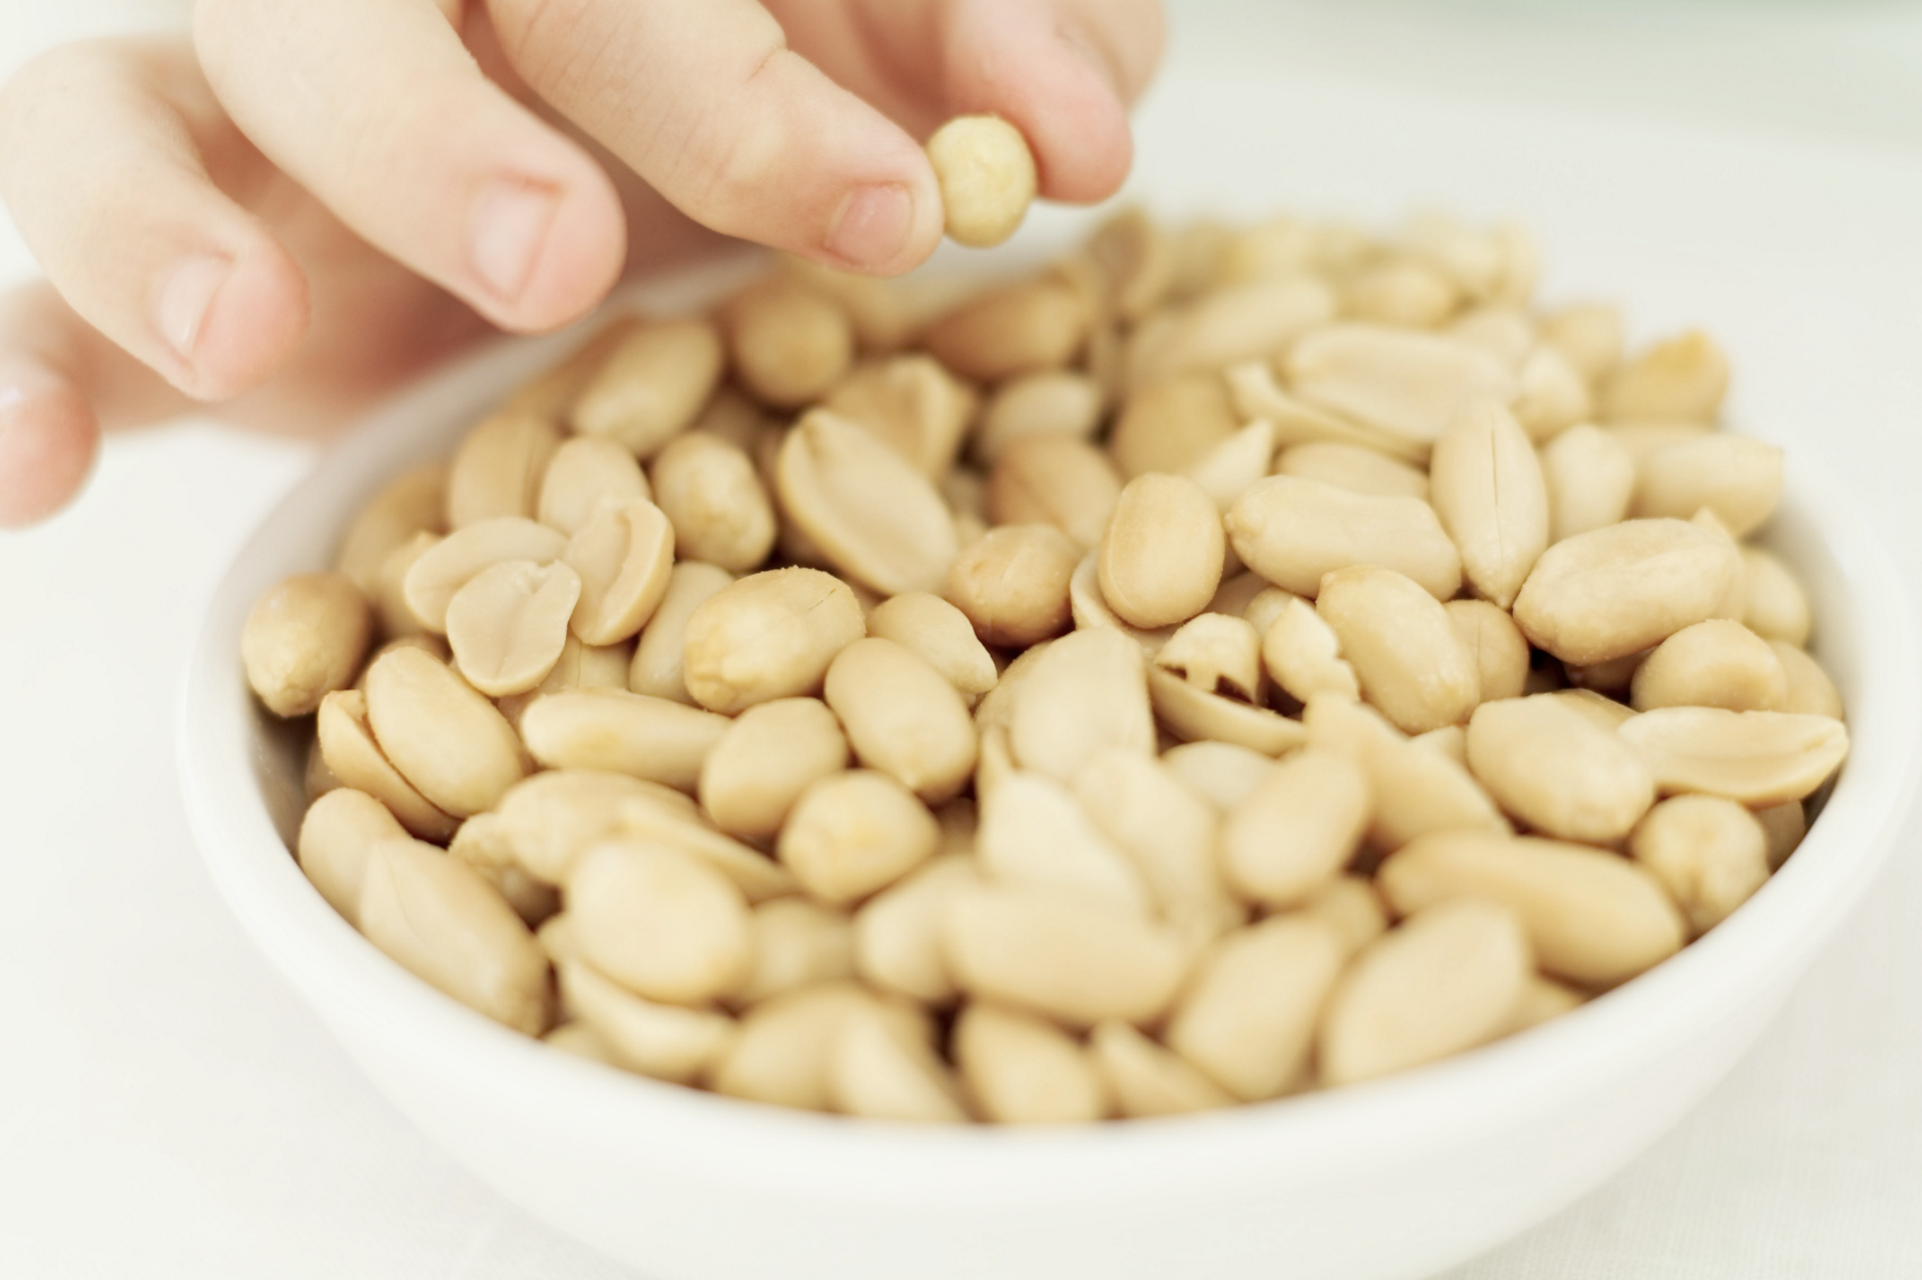 Properties of Peanuts for Skin